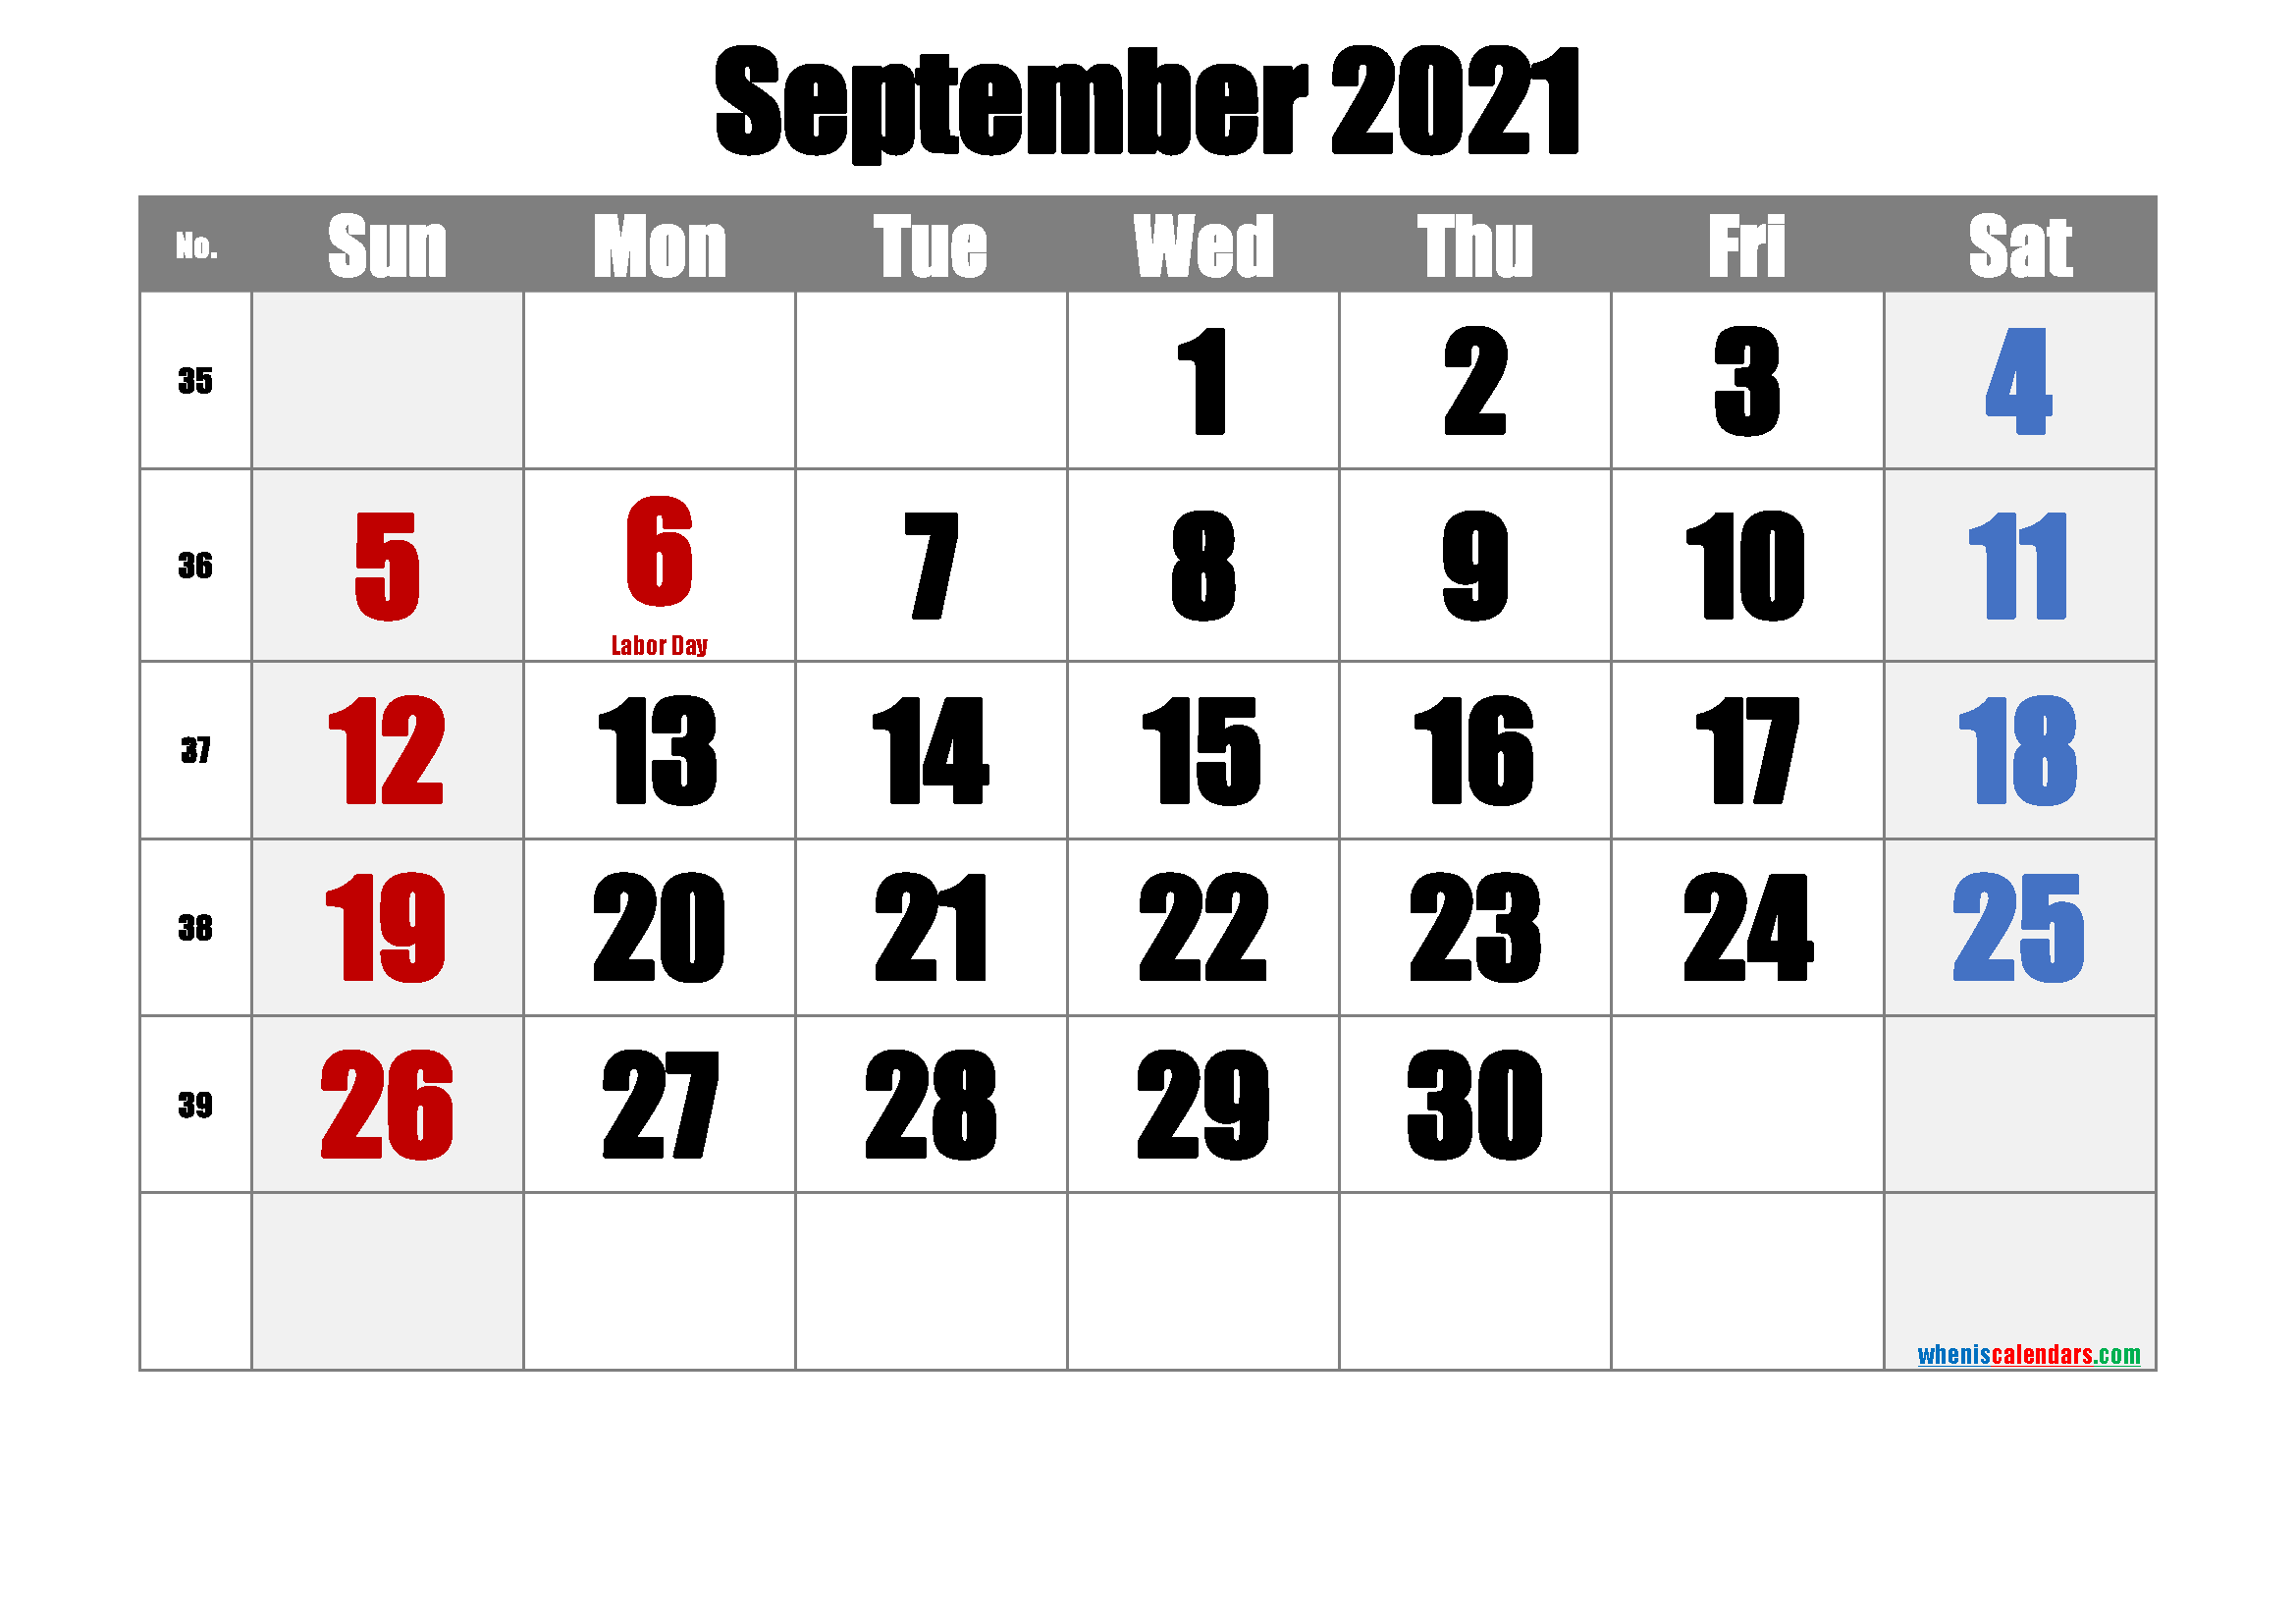 SEPTEMBER 2021 Printable Calendar with Holidays